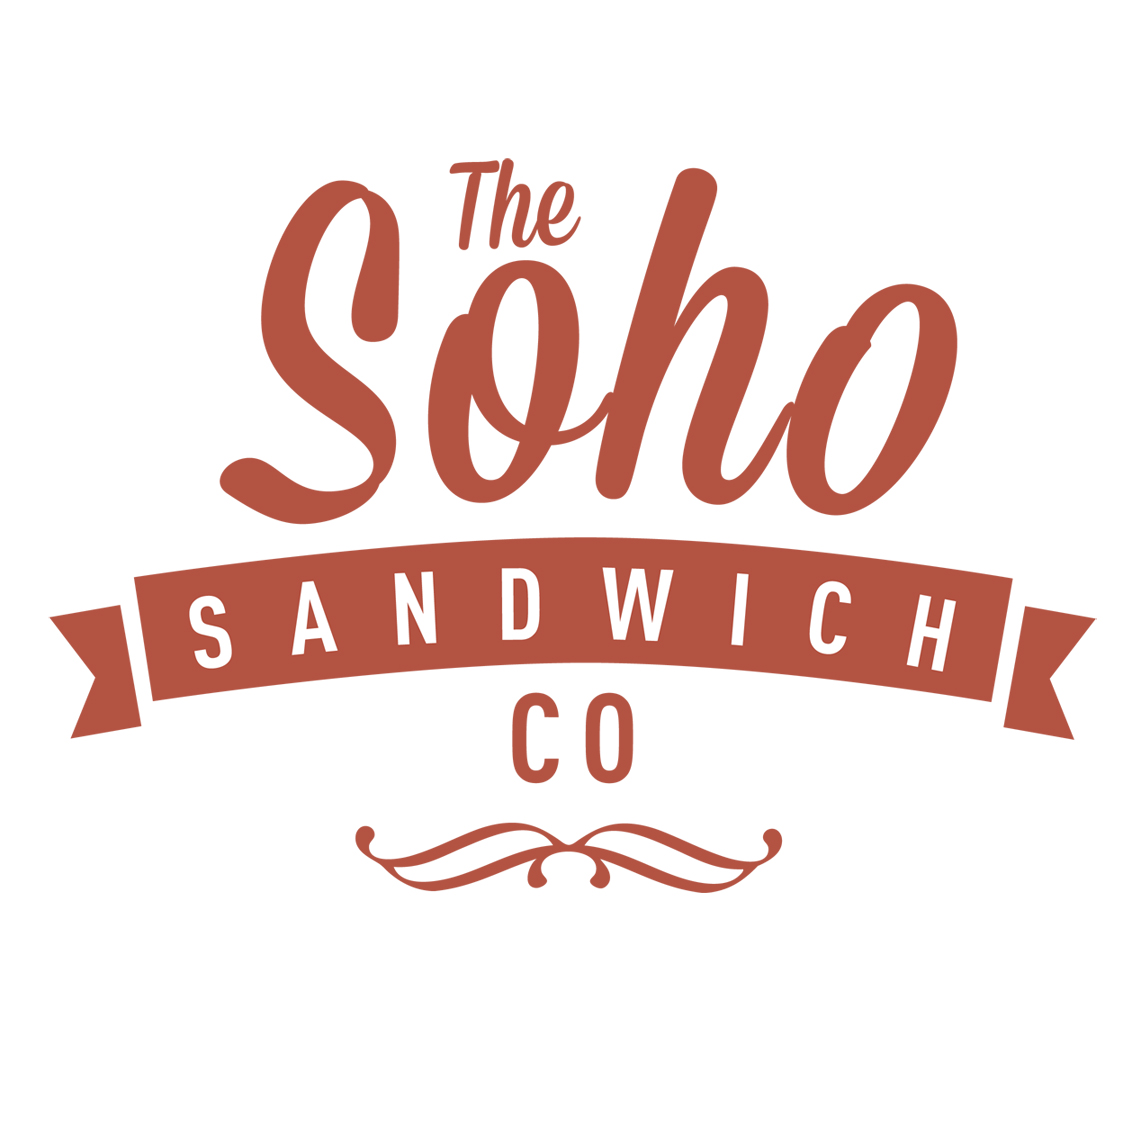 The Soho Sandwich Company Limited image.